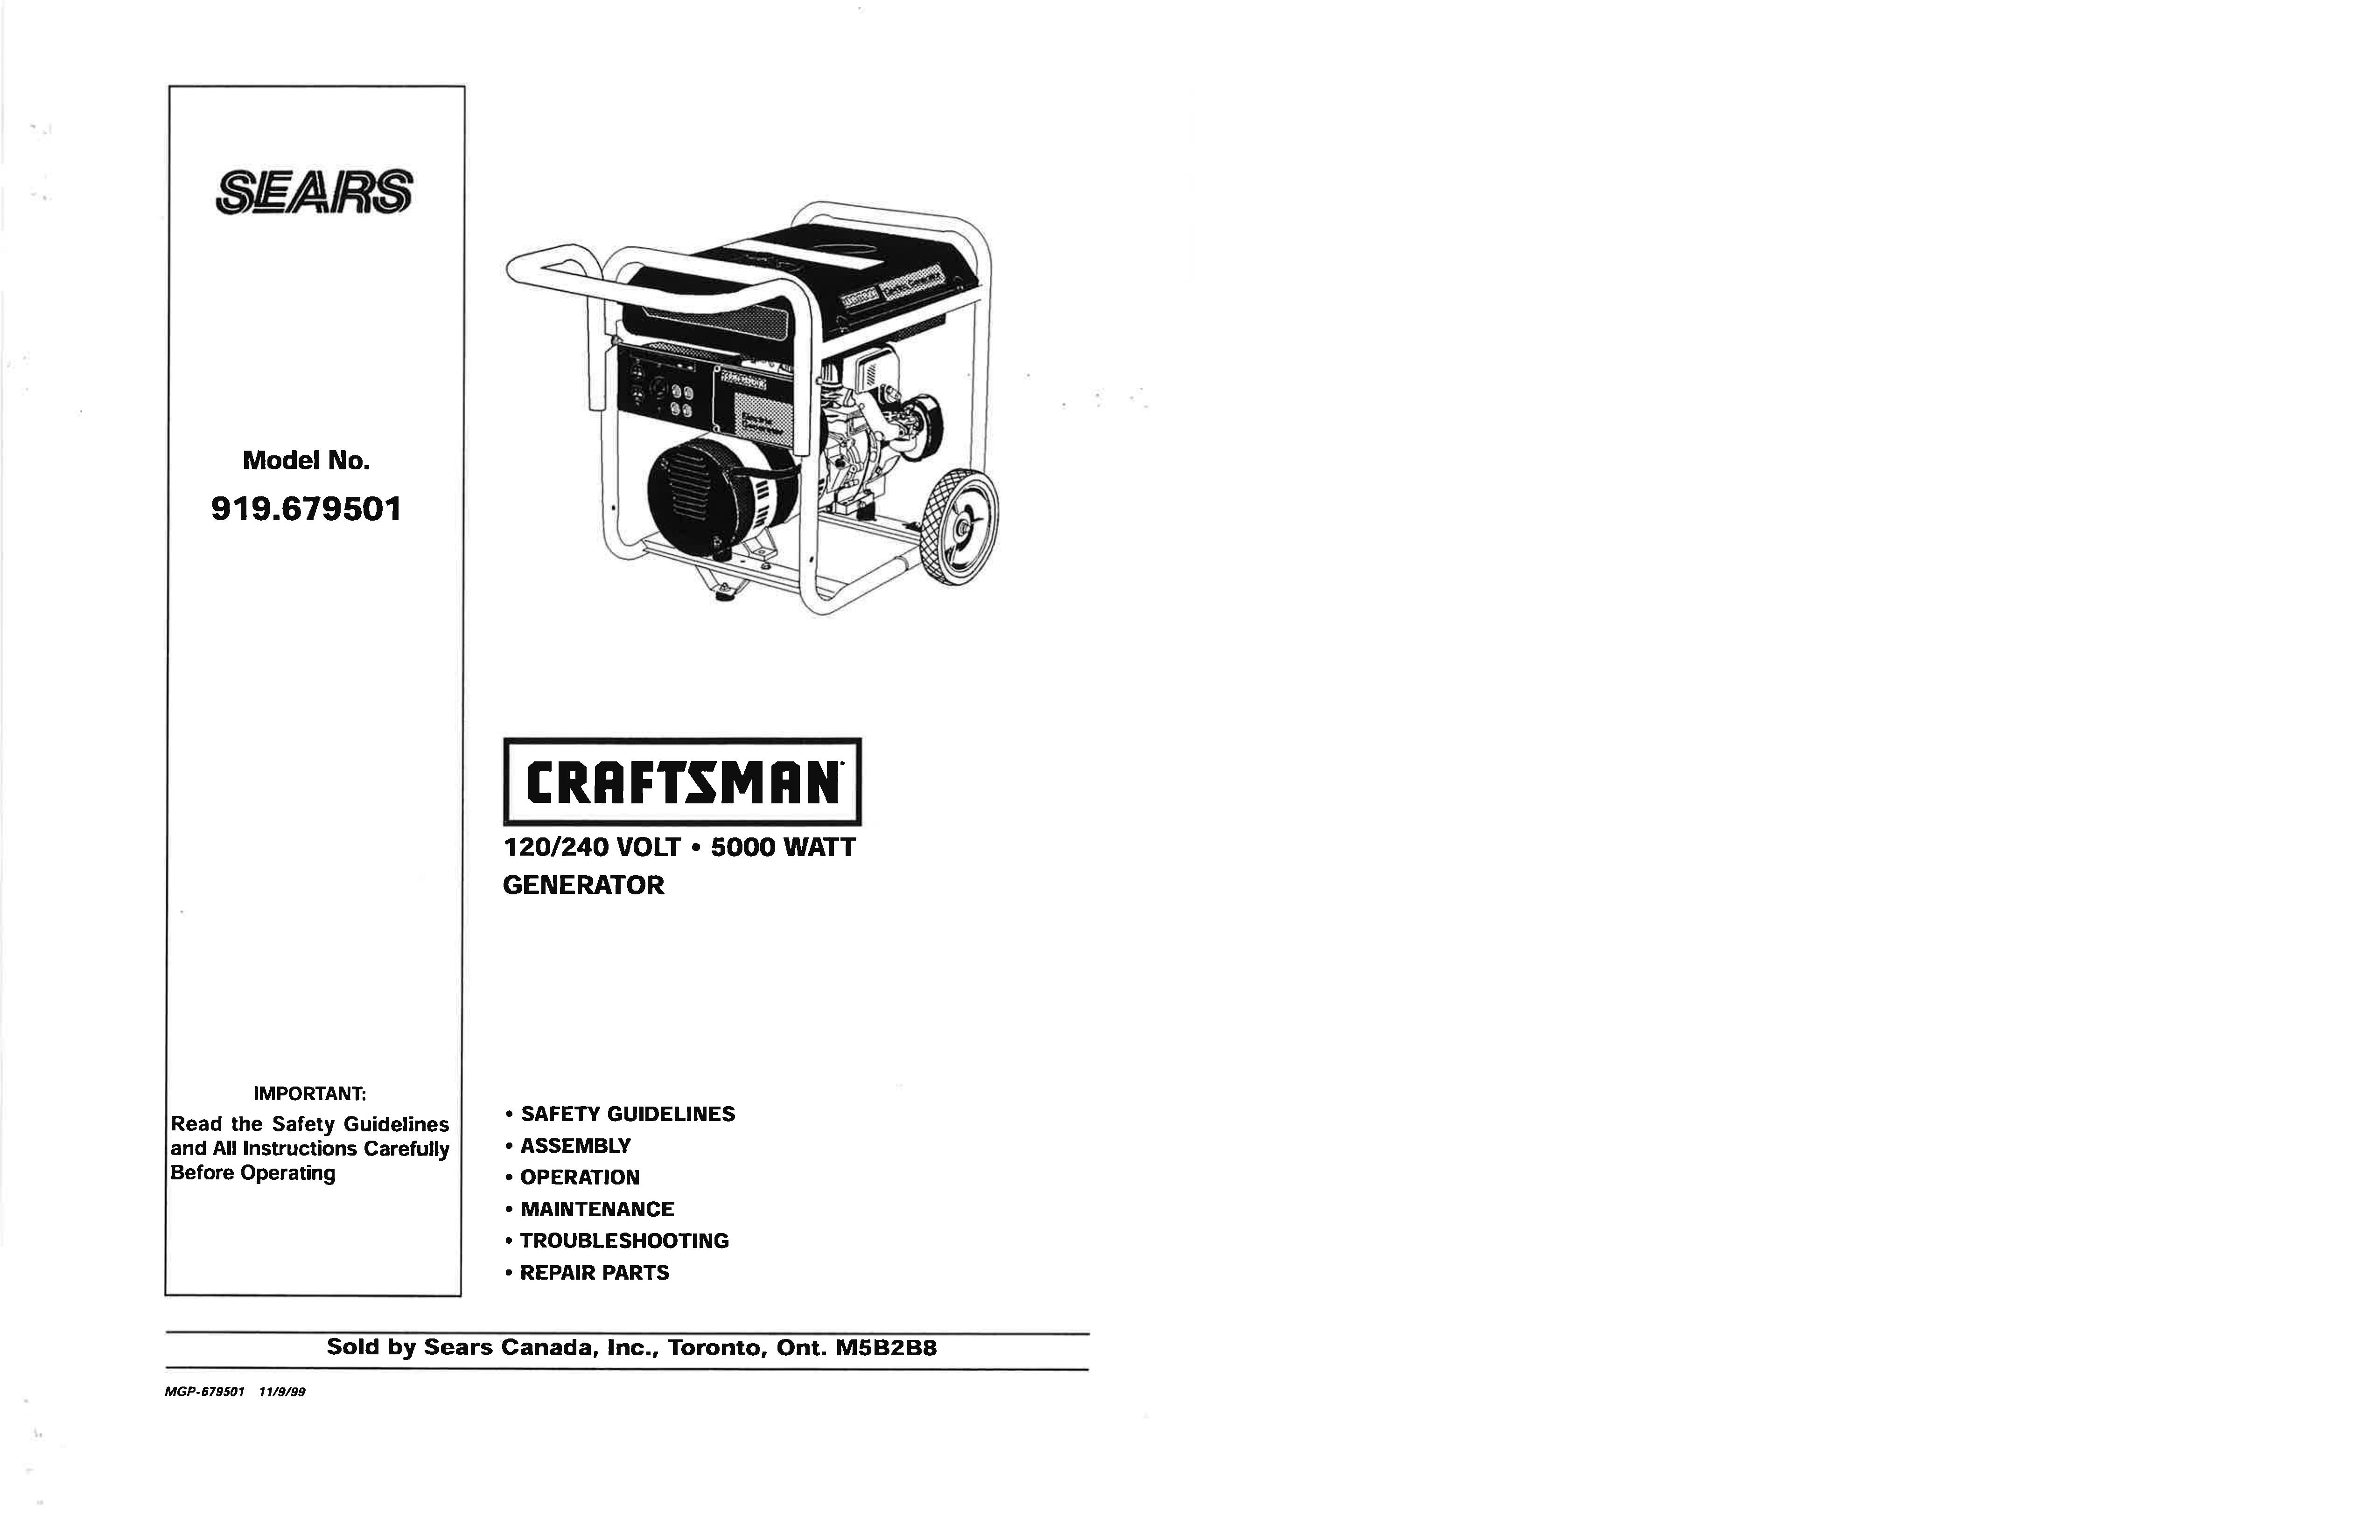 Craftsman 919.679501 Portable Generator User Manual